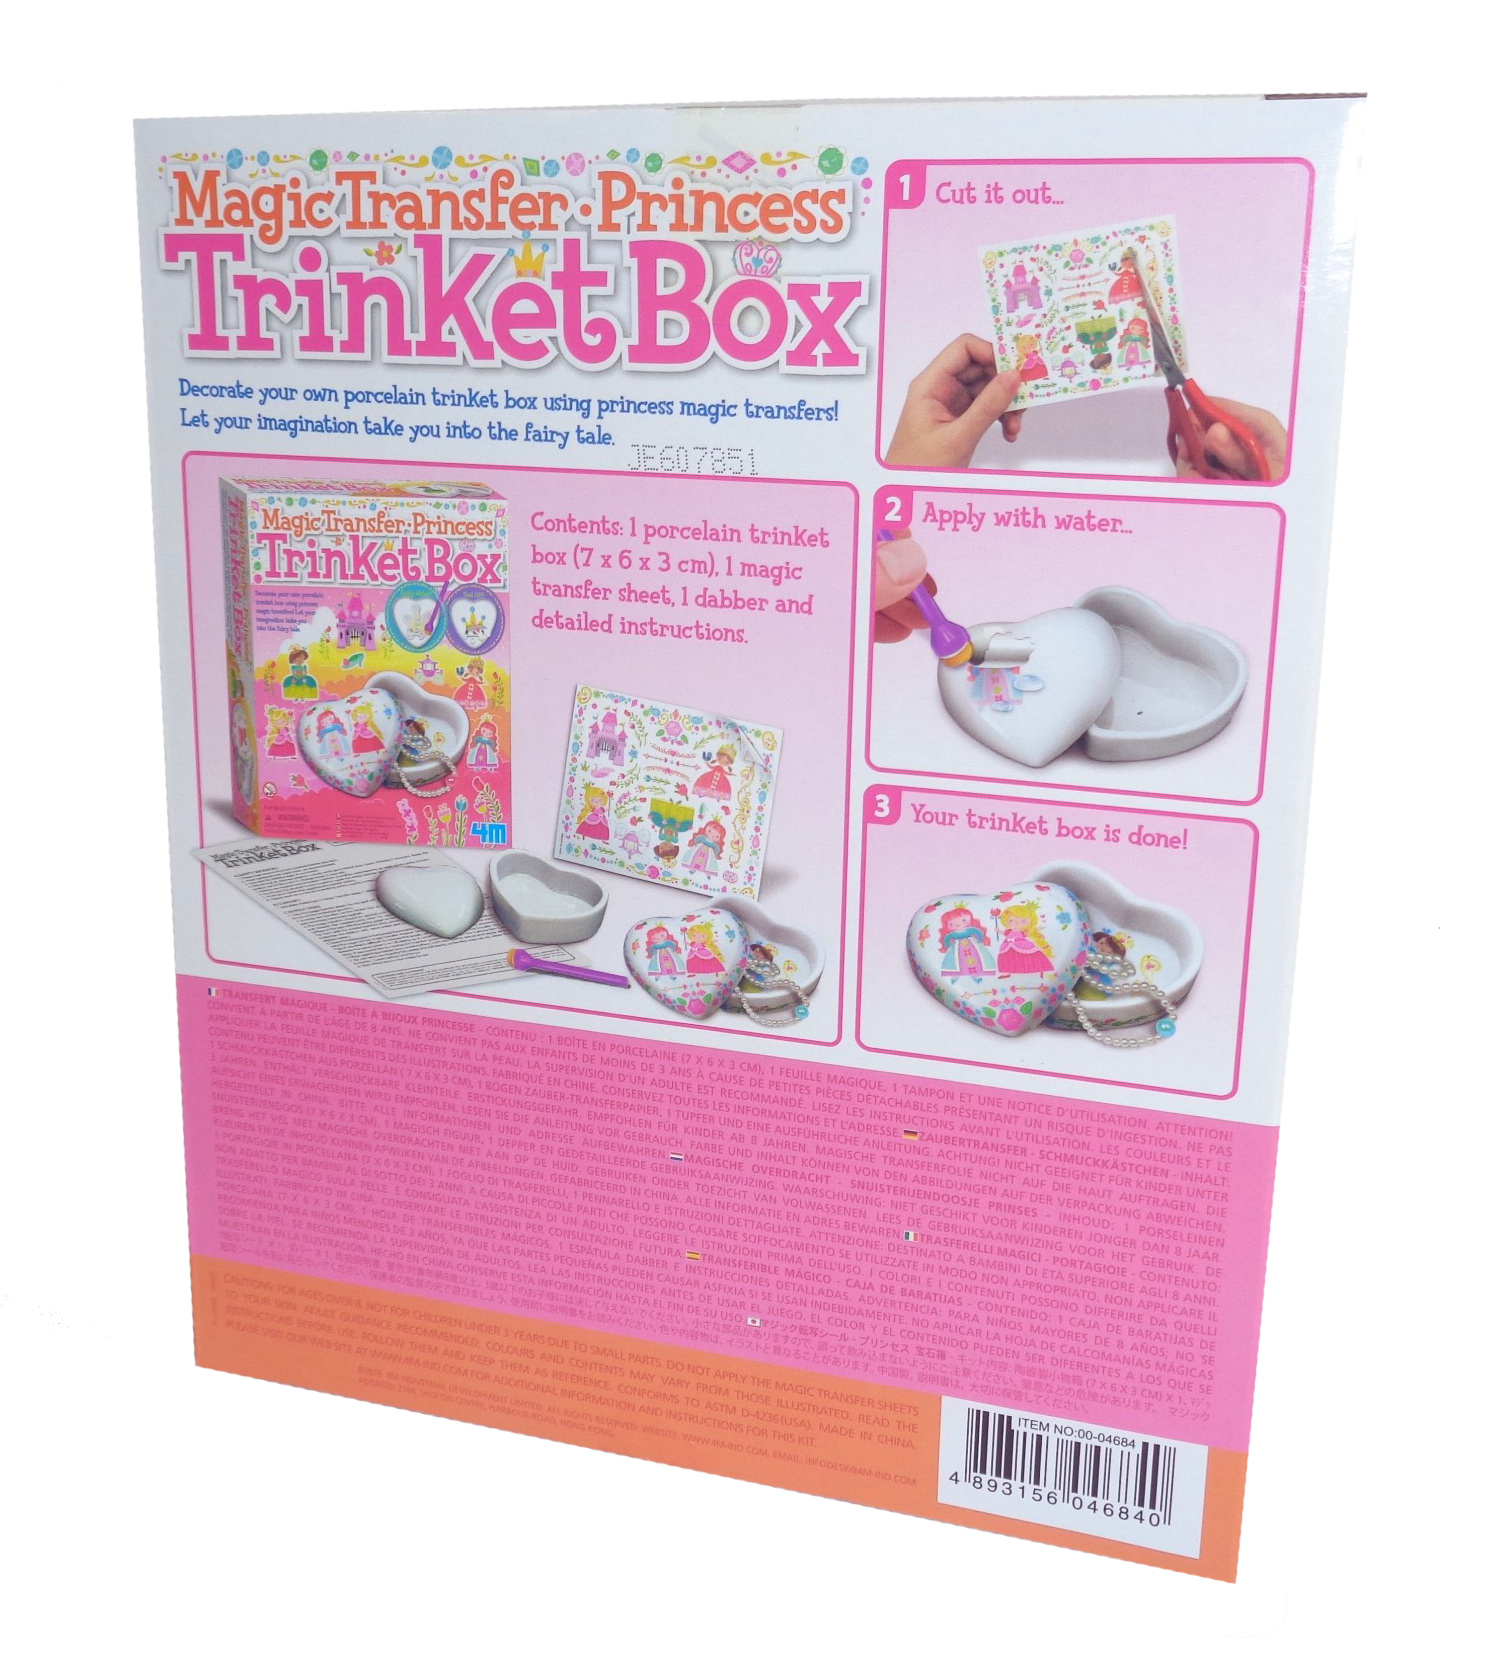 Childs magic transfer princess trinket box craft kit-6563